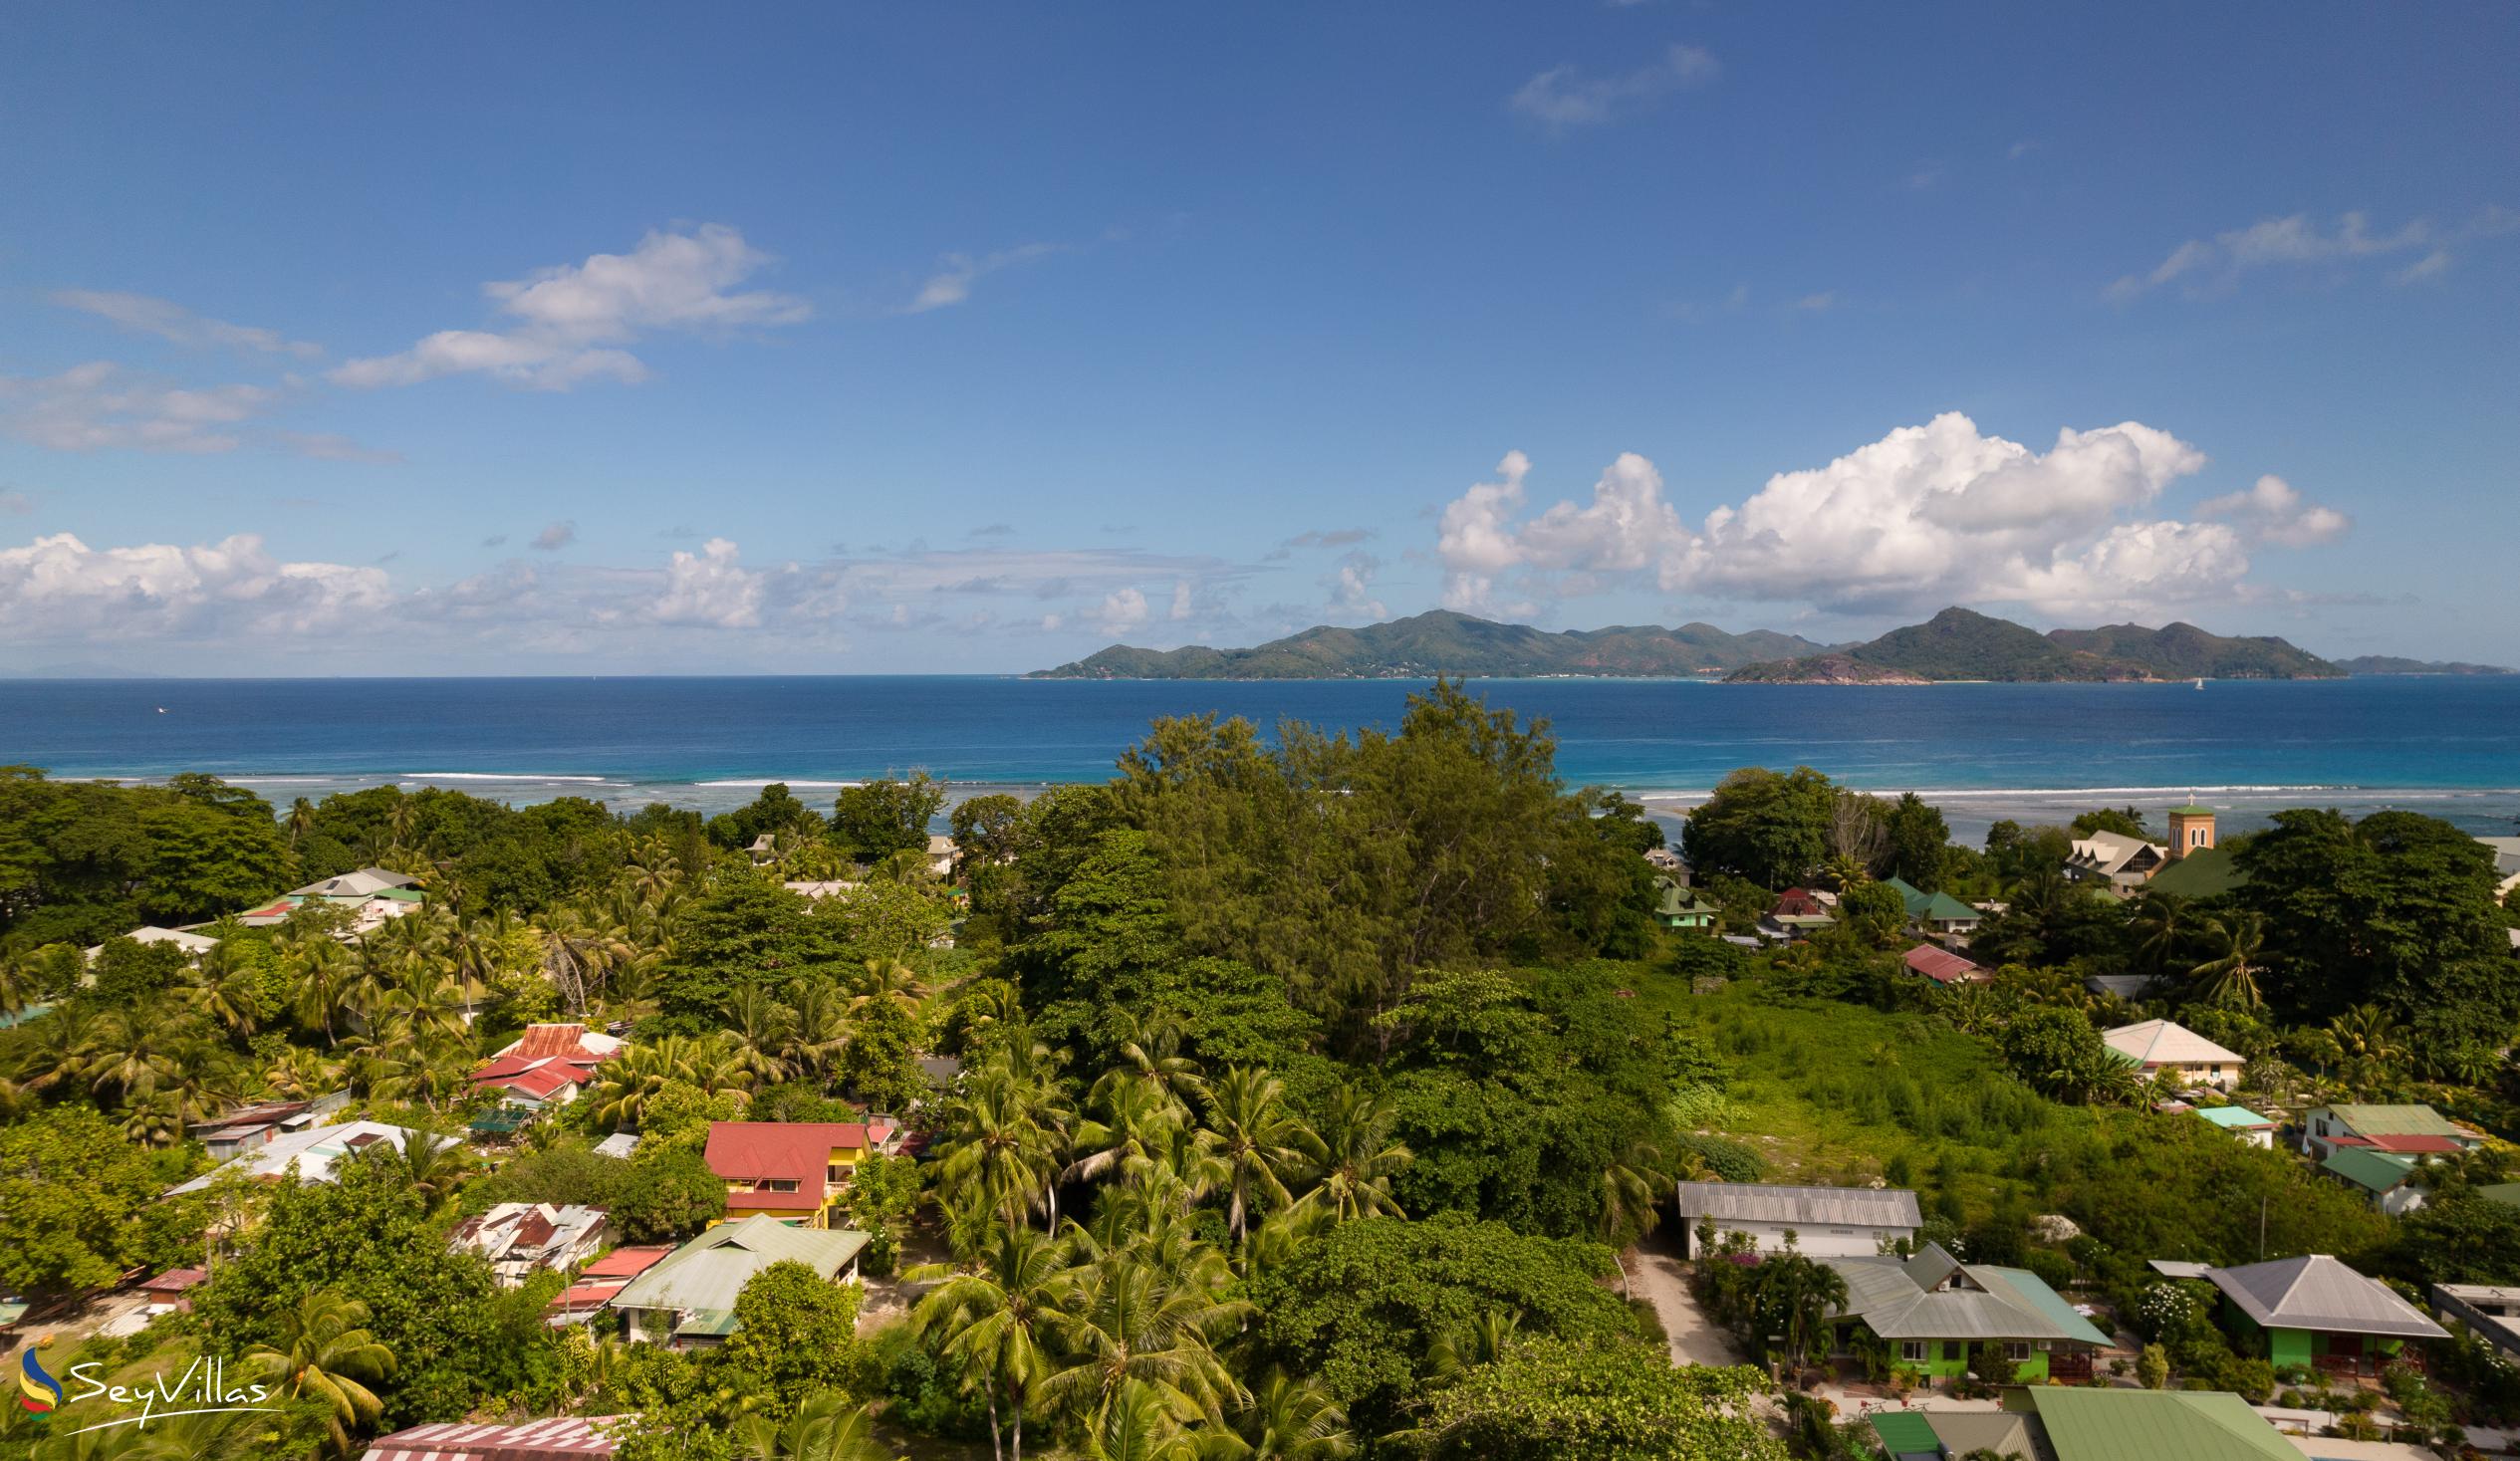 Foto 29: Coco de Mahi - Posizione - La Digue (Seychelles)